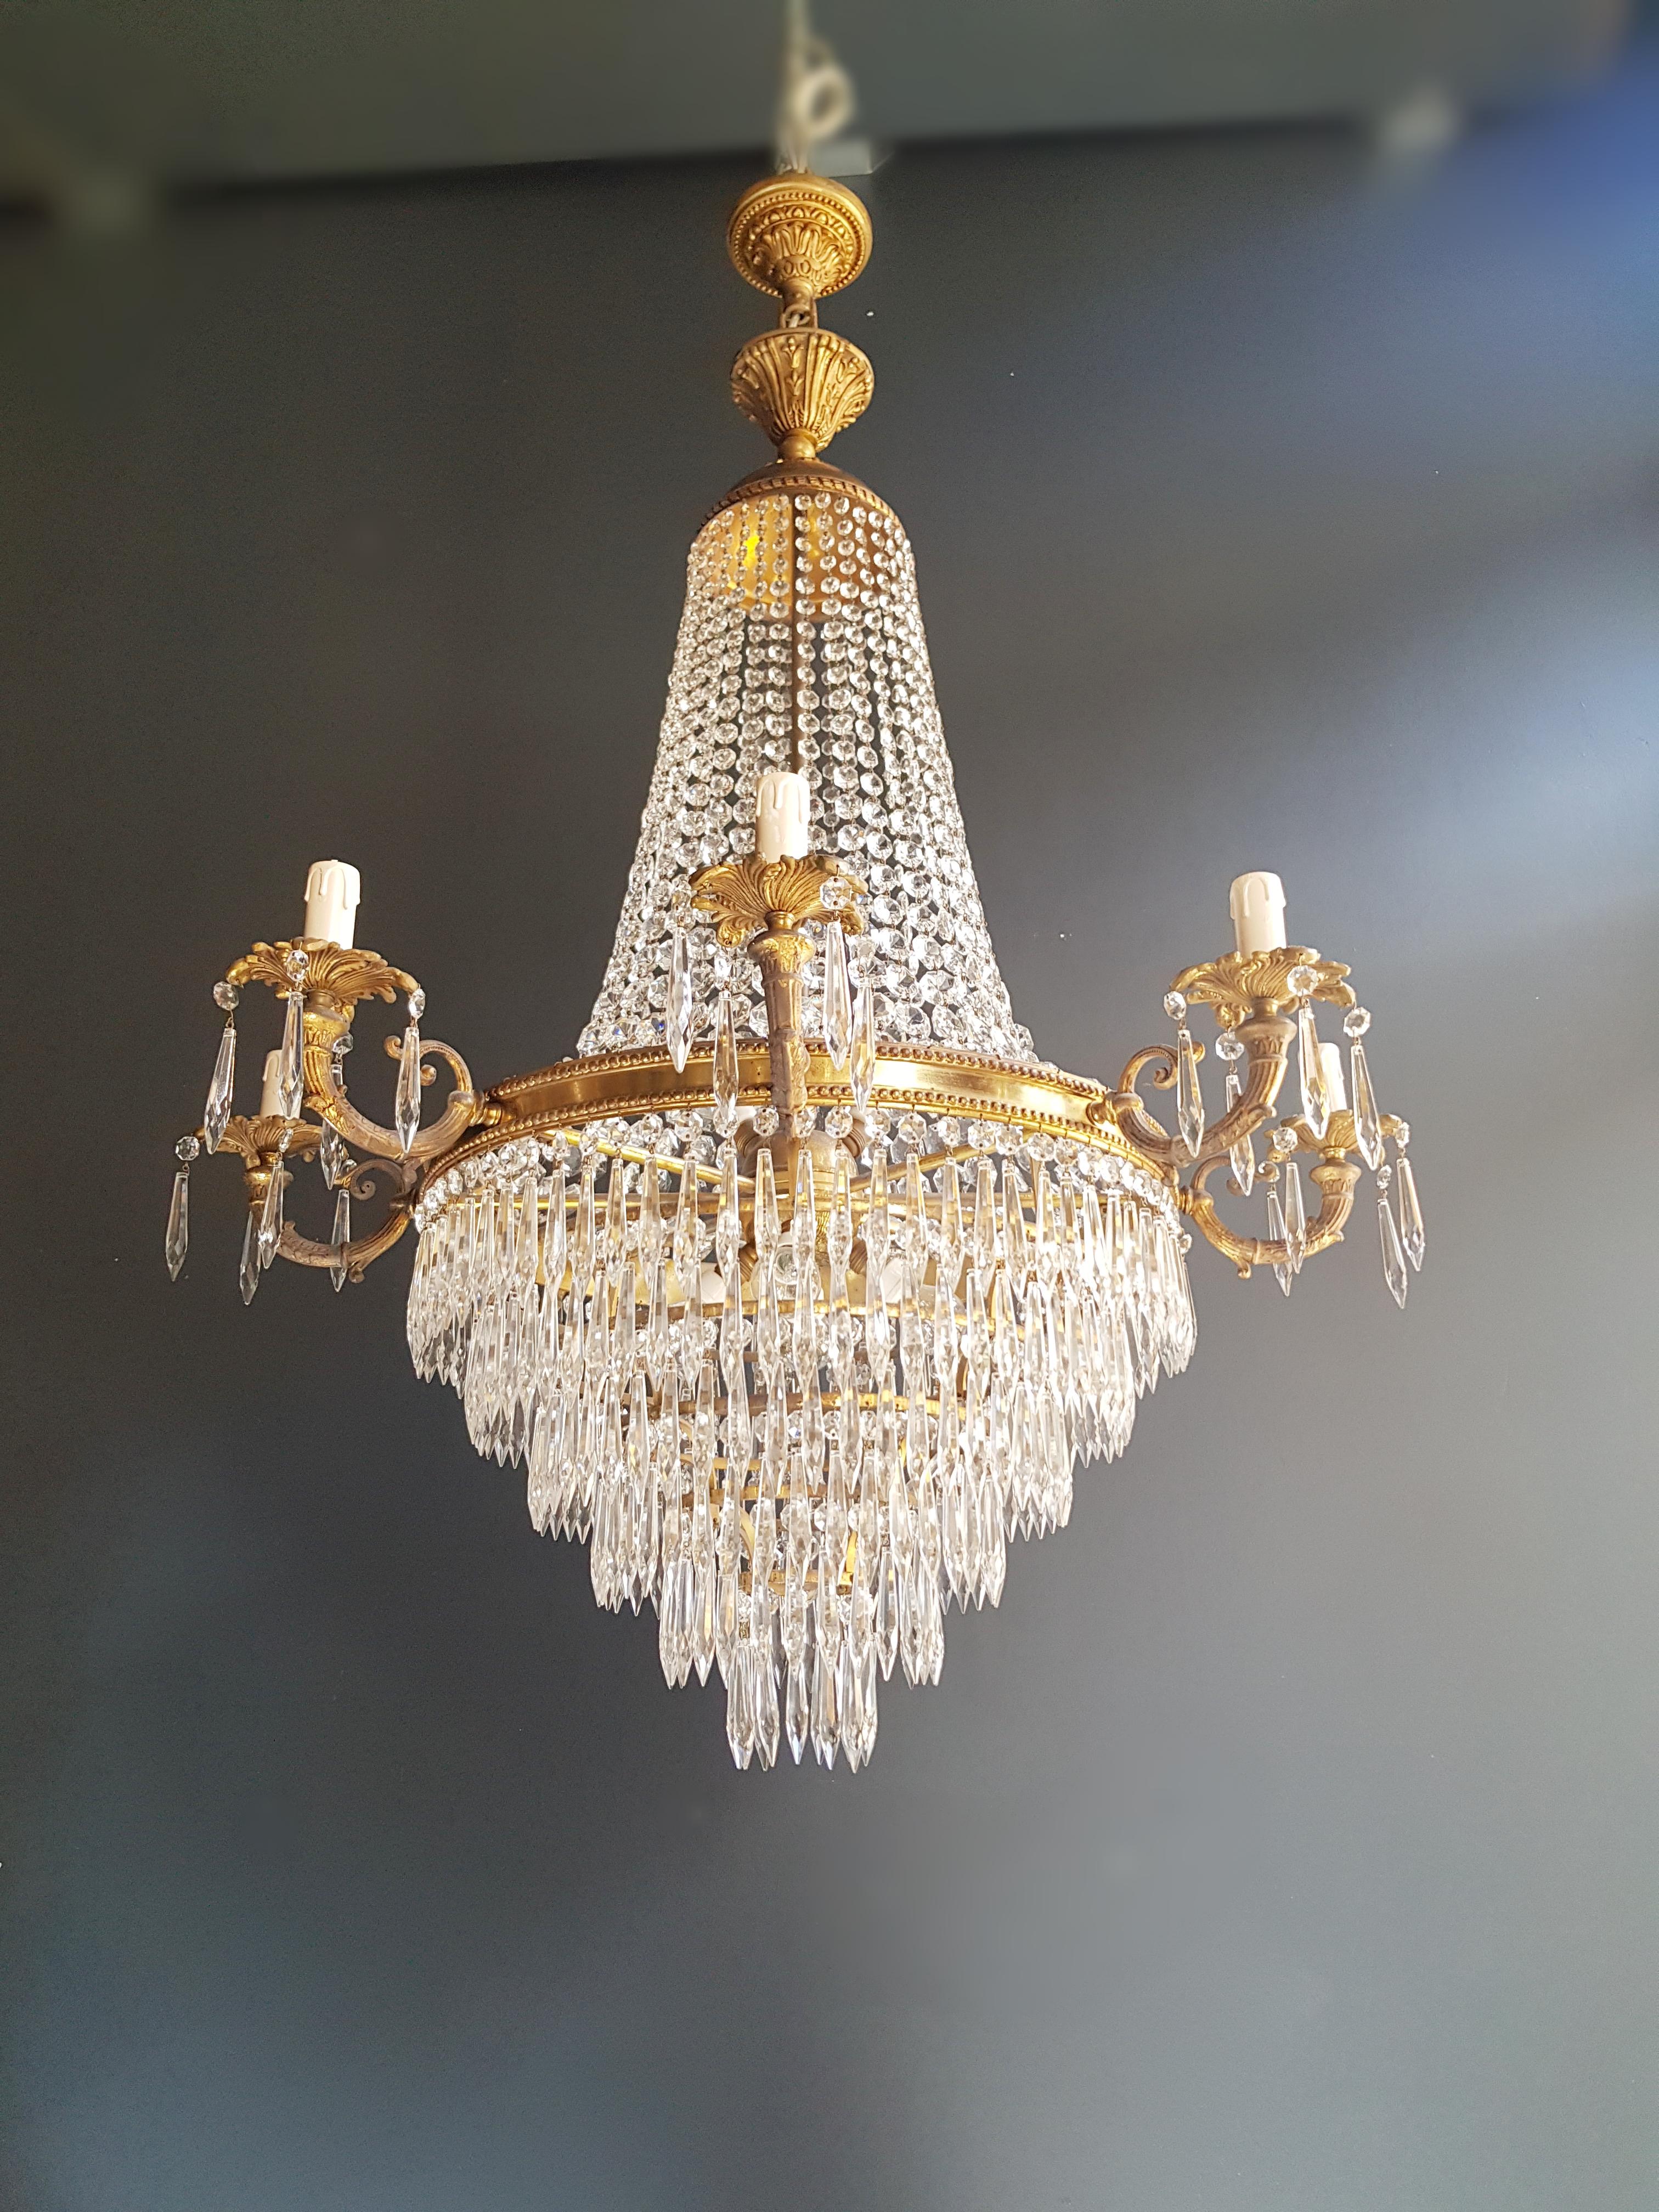 Montgolfiè Empire Sac a Pearl Chandelier Crystal Lustre Ceiling Lamp Antique 5